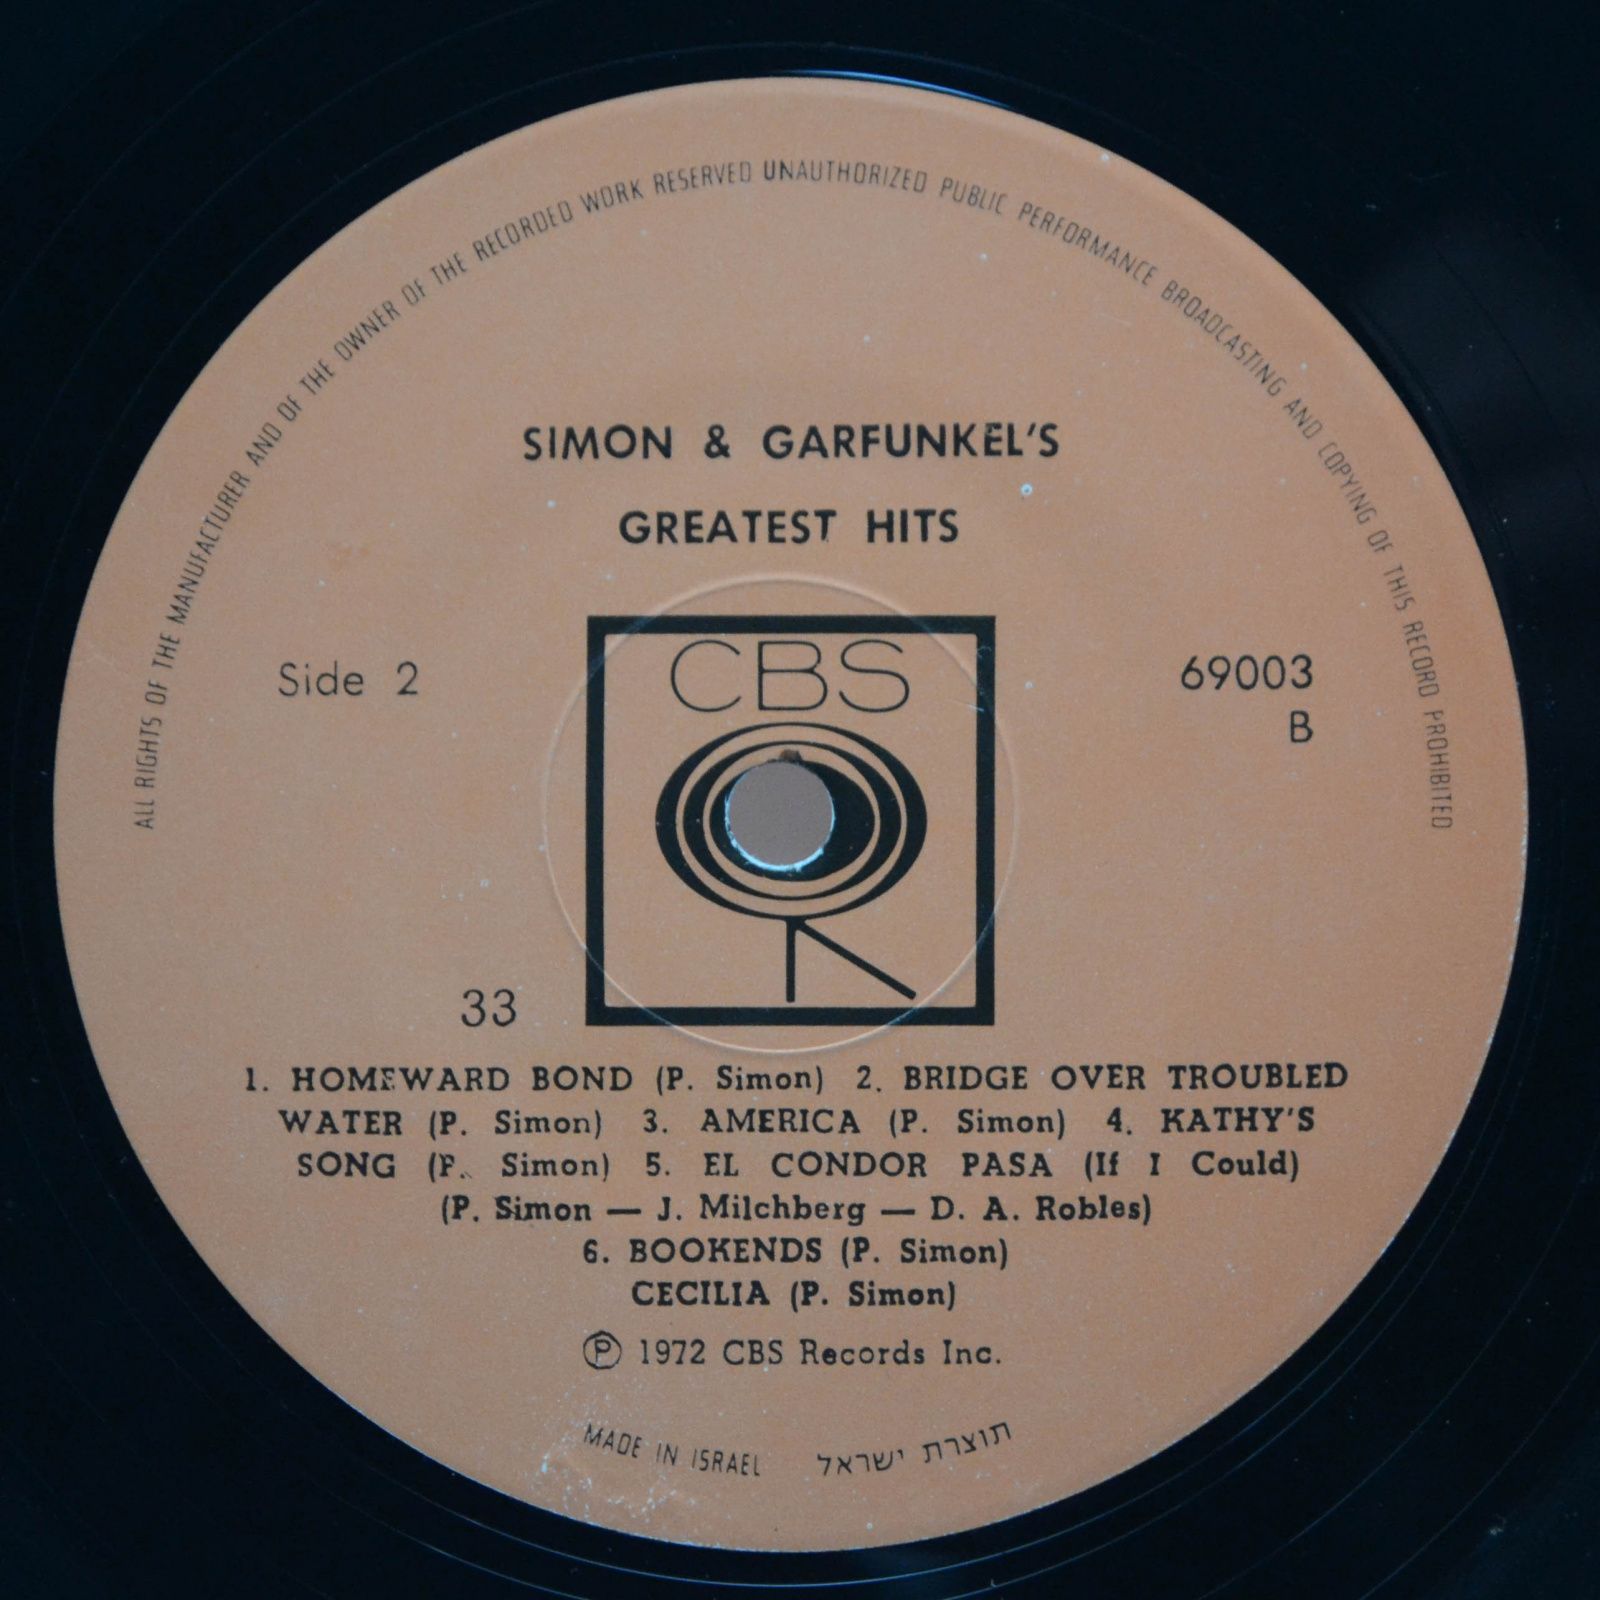 Simon & Garfunkel — Simon And Garfunkel's Greatest Hits, 1972